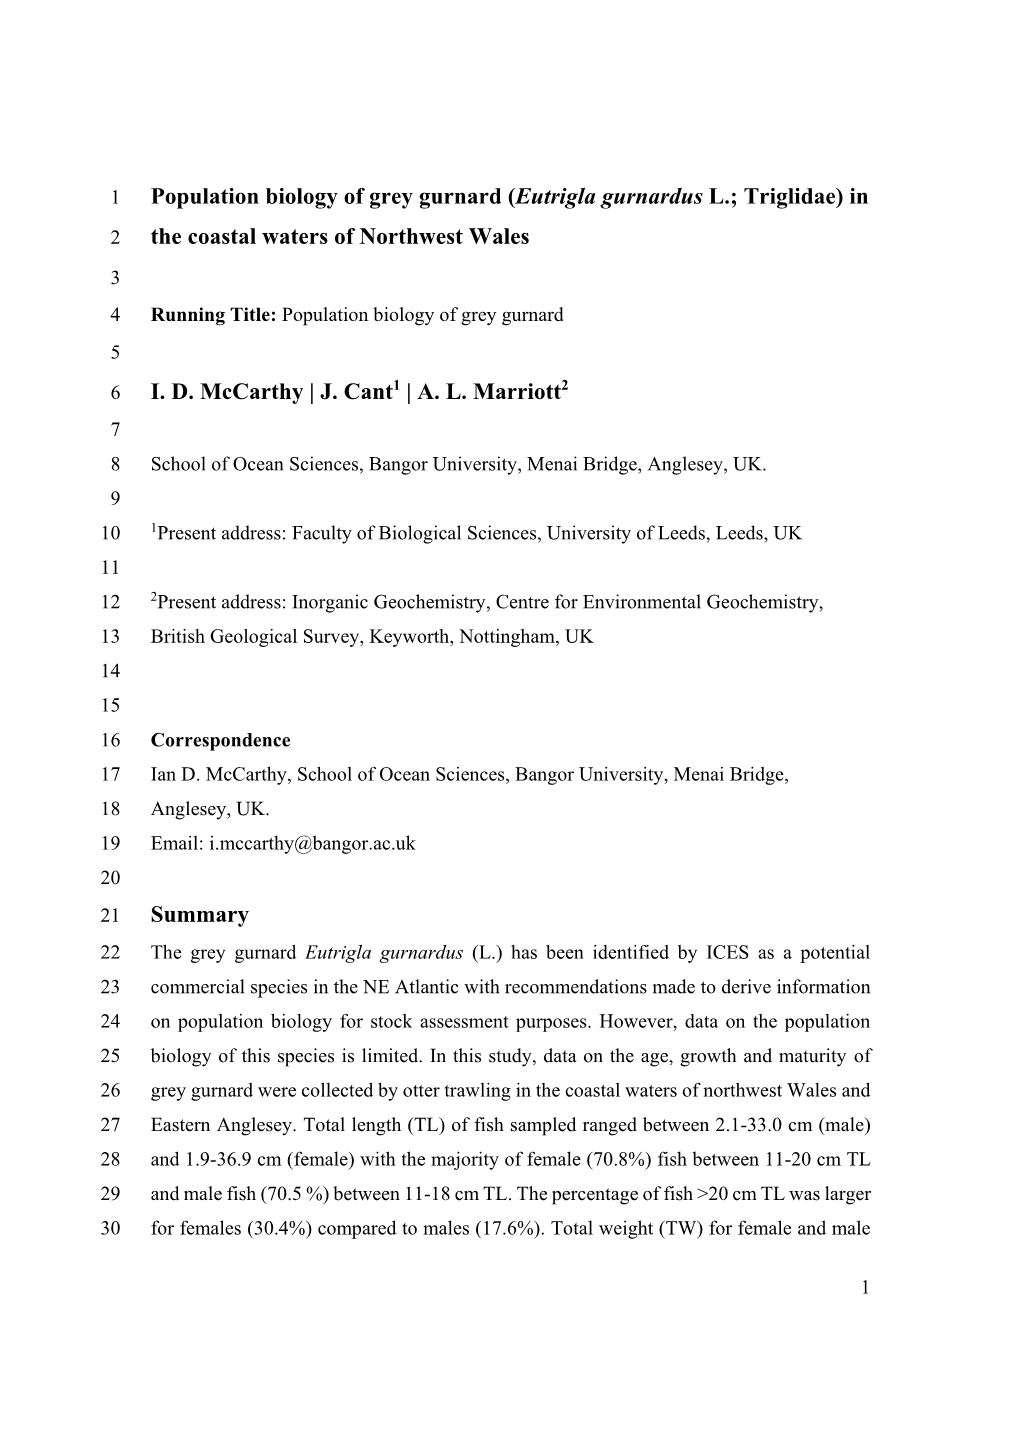 Population Biology of Grey Gurnard (Eutrigla Gurnardus L.; Triglidae) in the Coastal Waters of Northwest Wales I. D. Mccarthy |